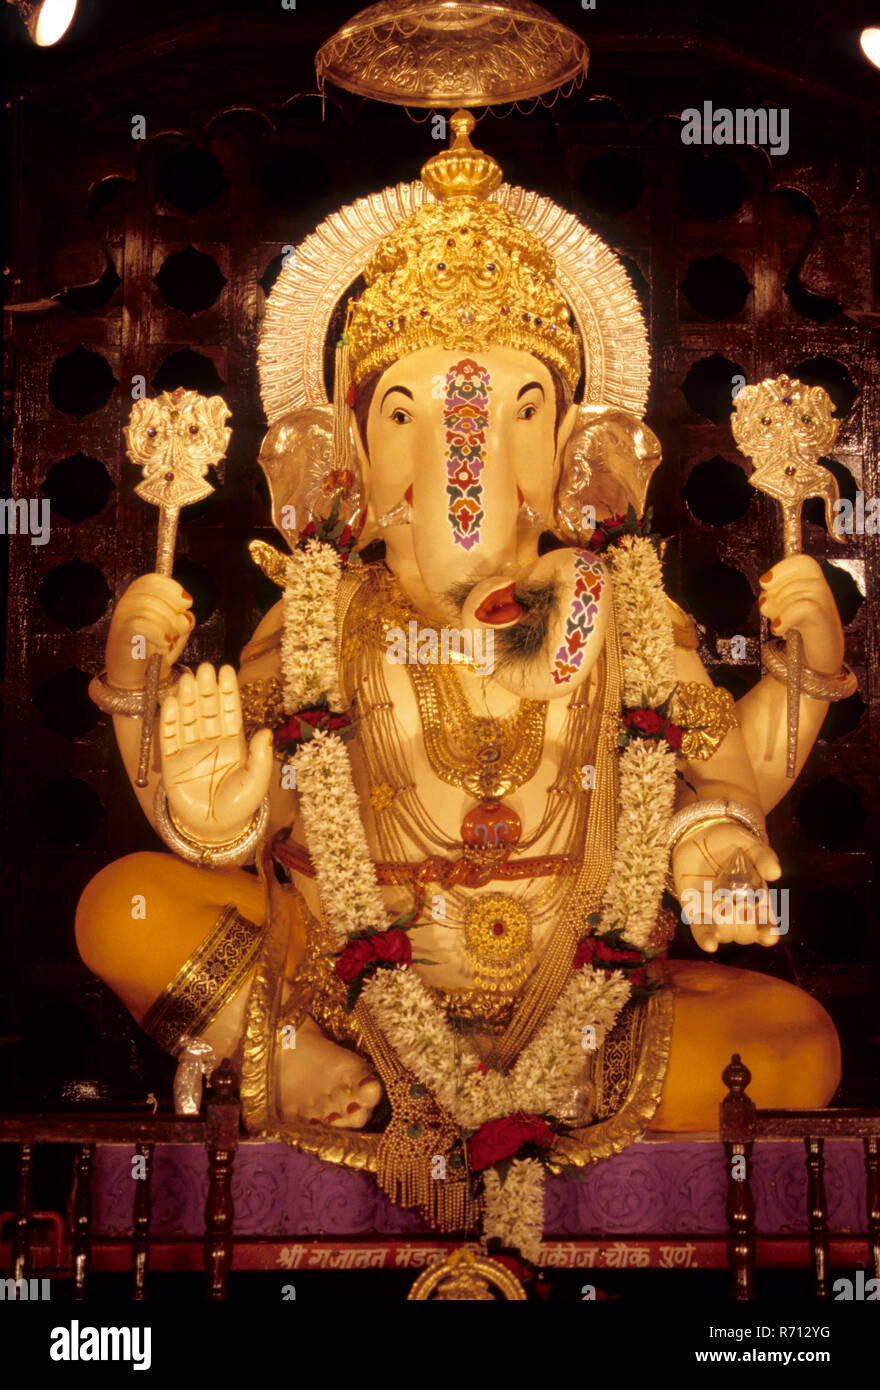 Ganesh ganpati Festival Elephant head Lord procession Idol pune, maharashtra, india Stock Photo